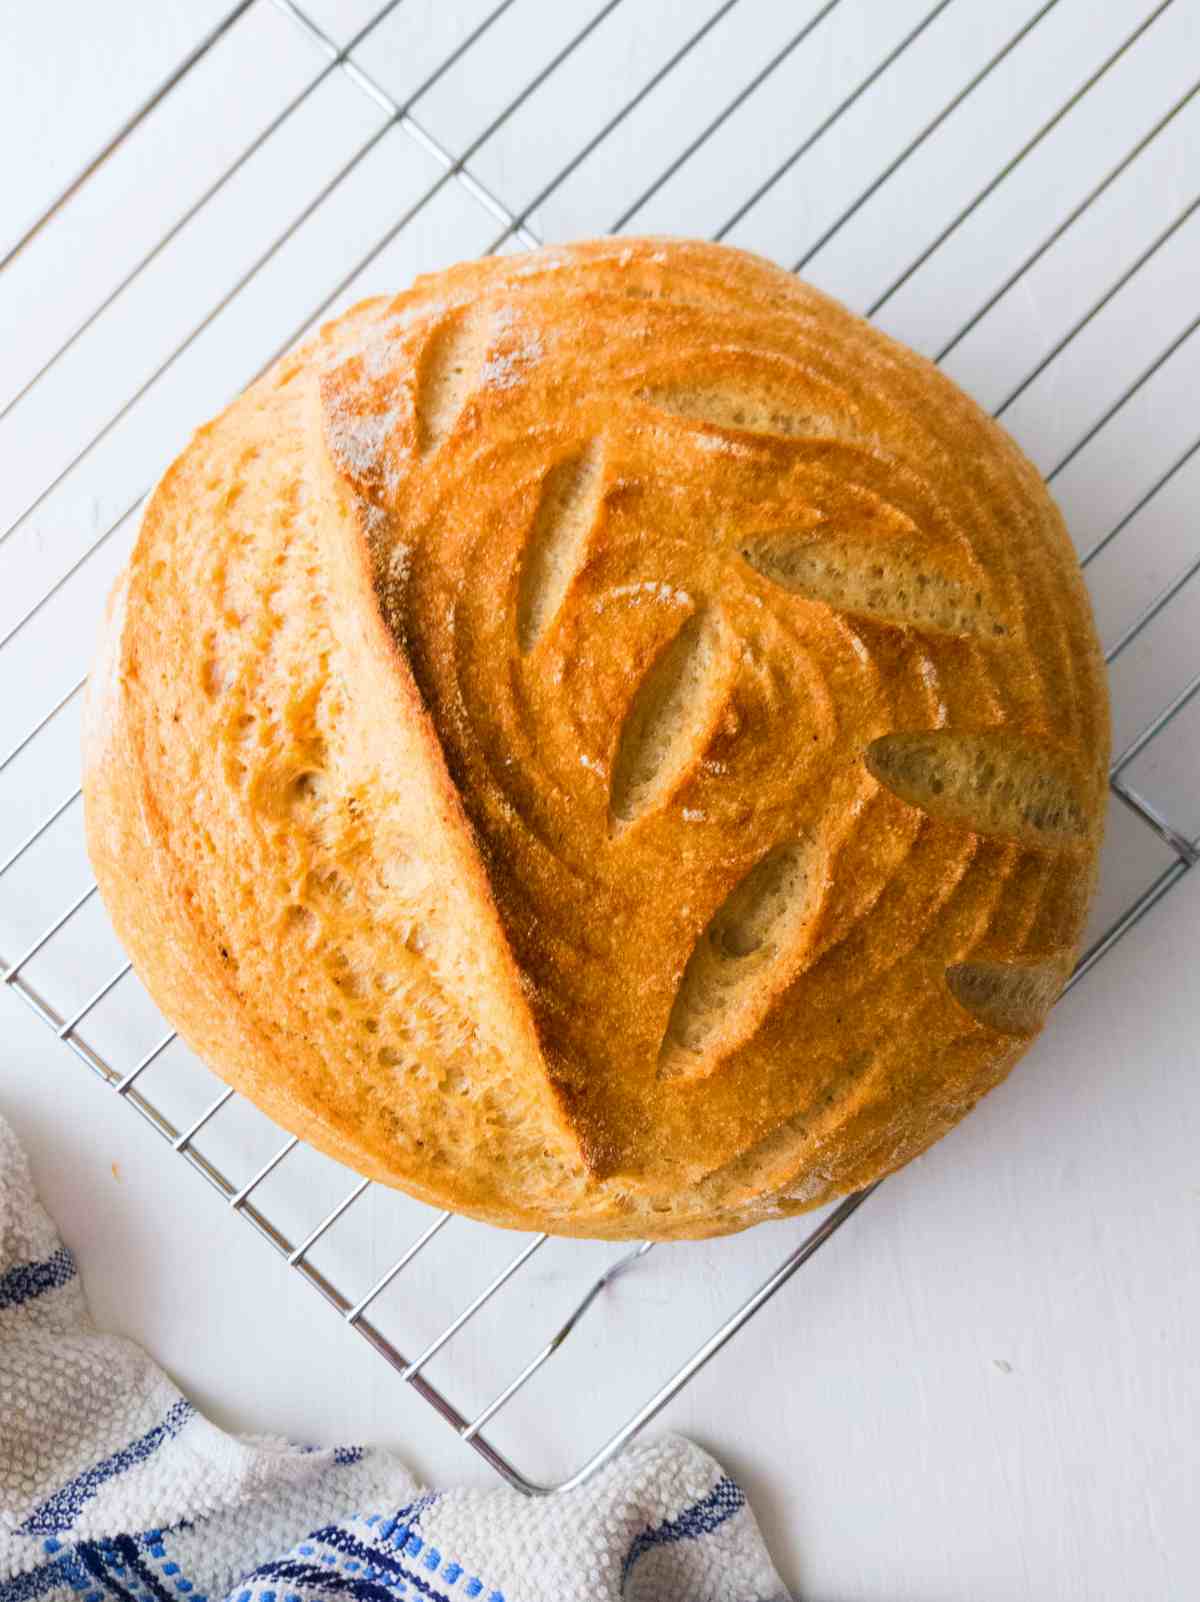 Gluten-free sourdough bread on a cooling rack.